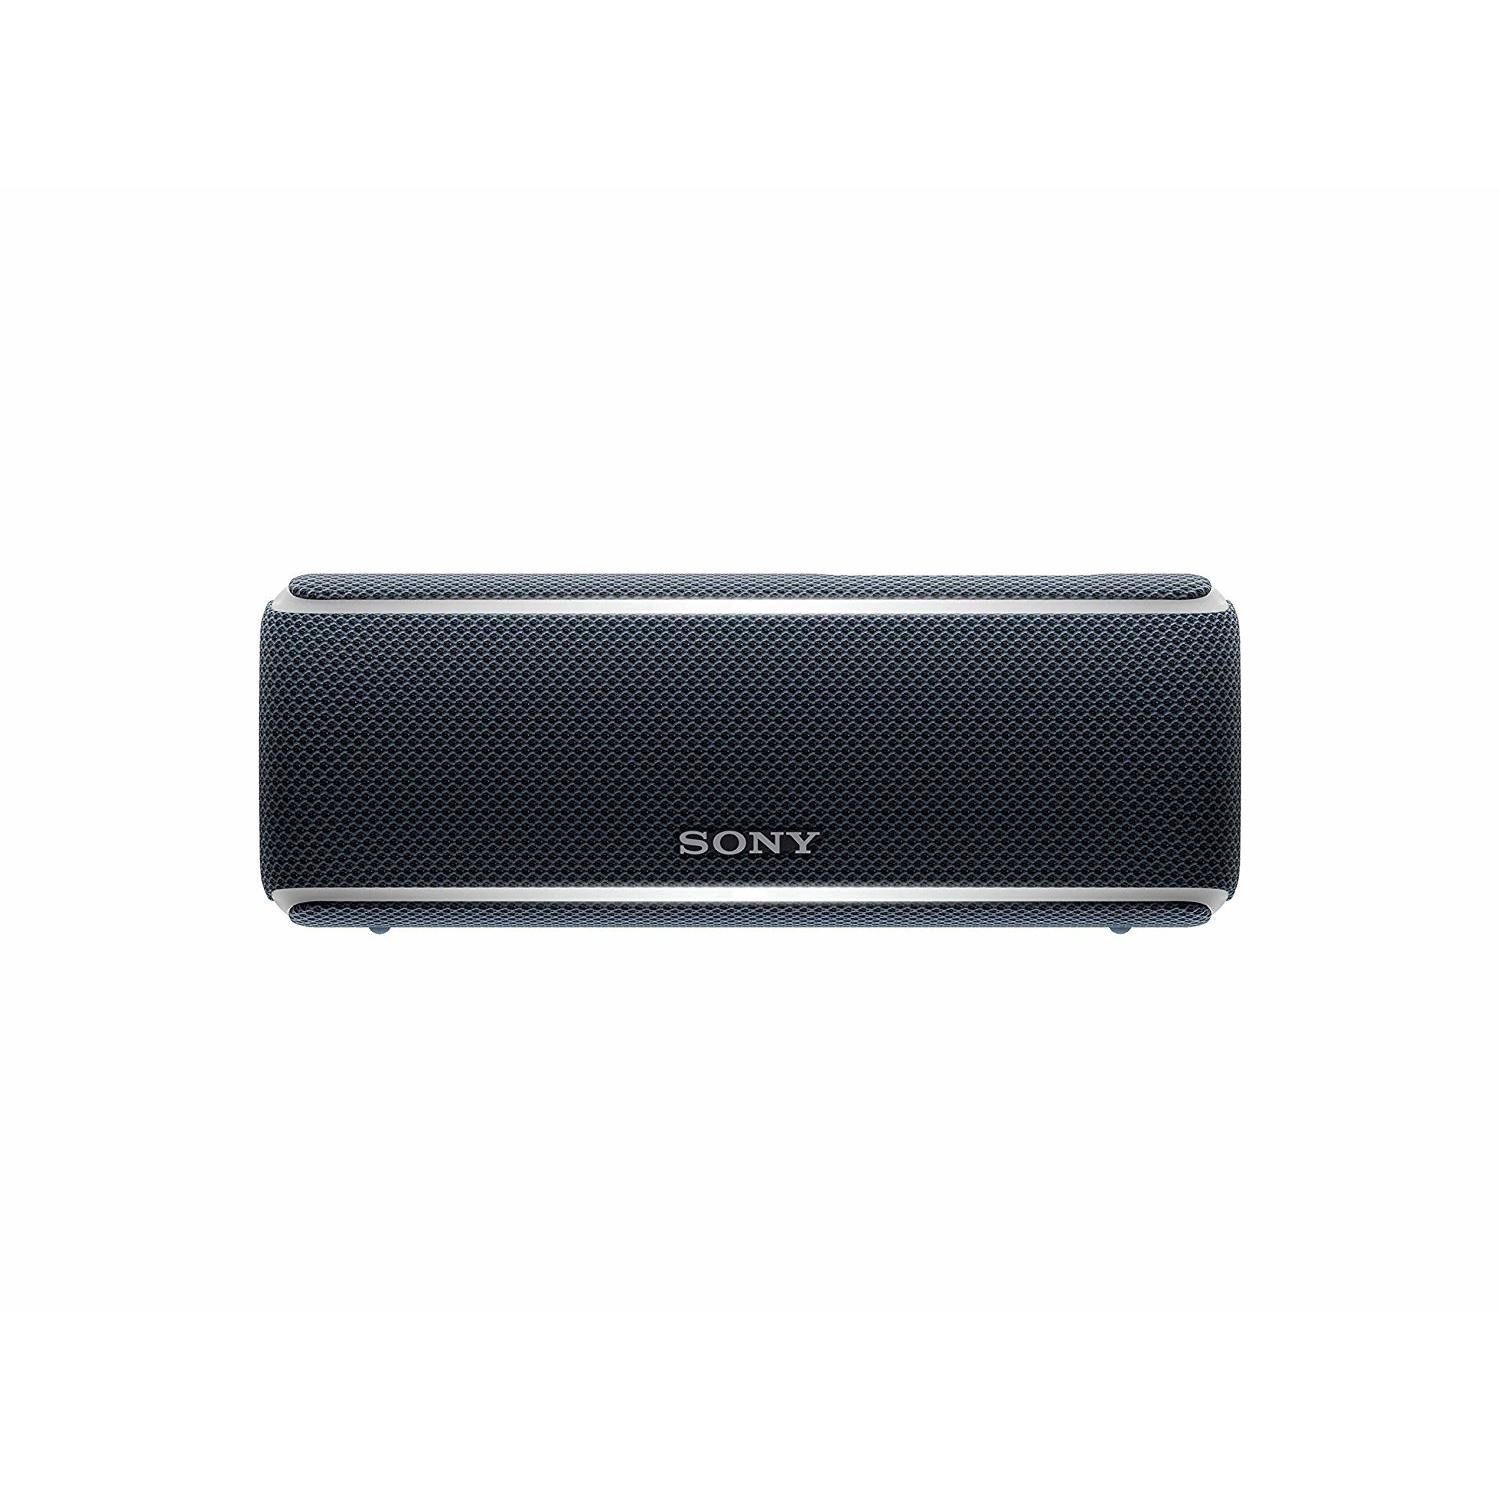 Sony SRS-XB21 Portable Bluetooth Wireless Speaker Black